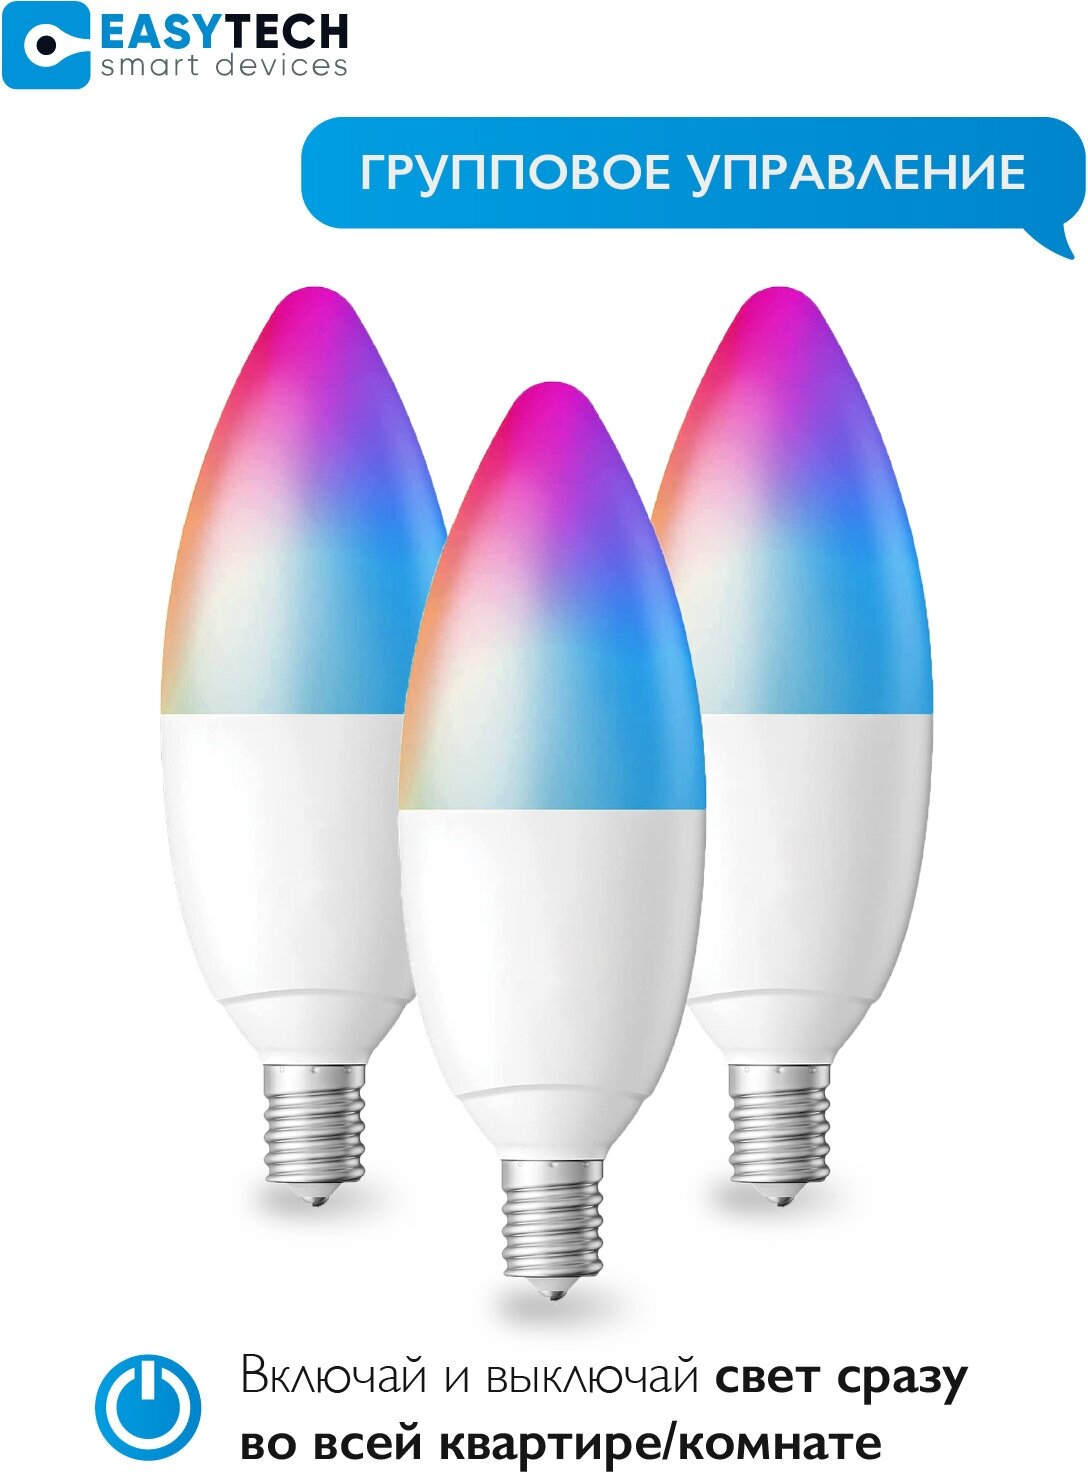 Умная лампочка RGB WI-FI с Алисой светодиодная E14